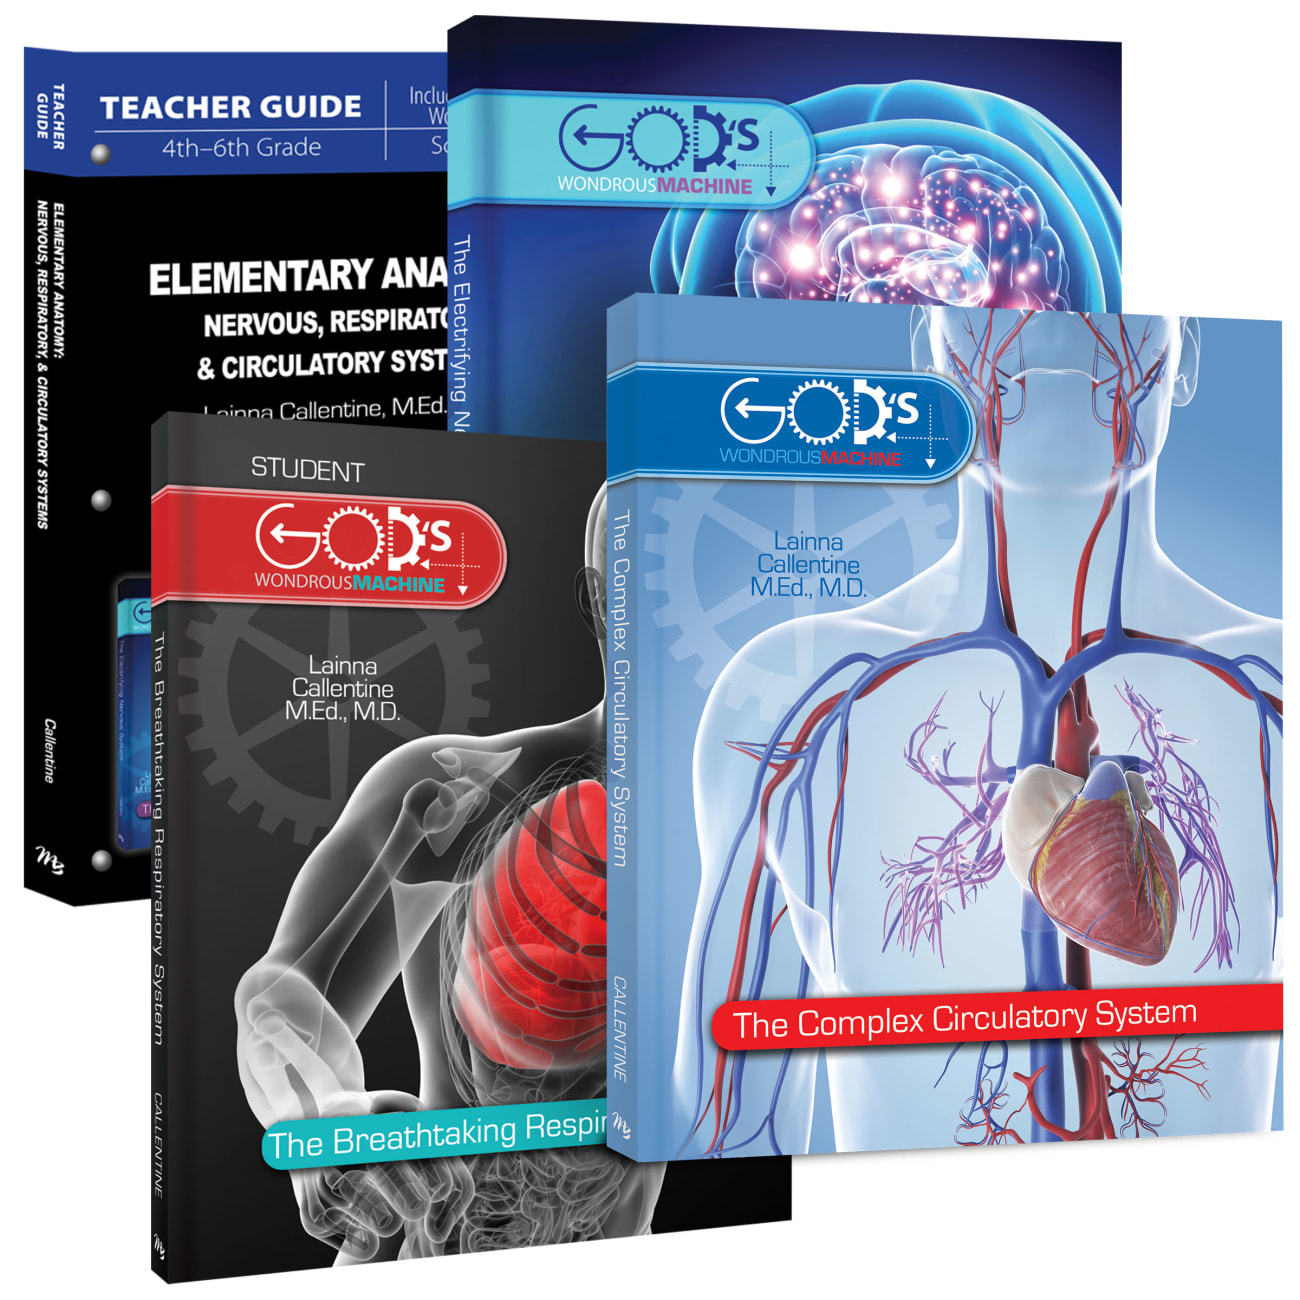 Elementary Anatomy - Nervous, Respiratory & Circulatory Systems (Package) (God's Wondrous Machine Series) Pack